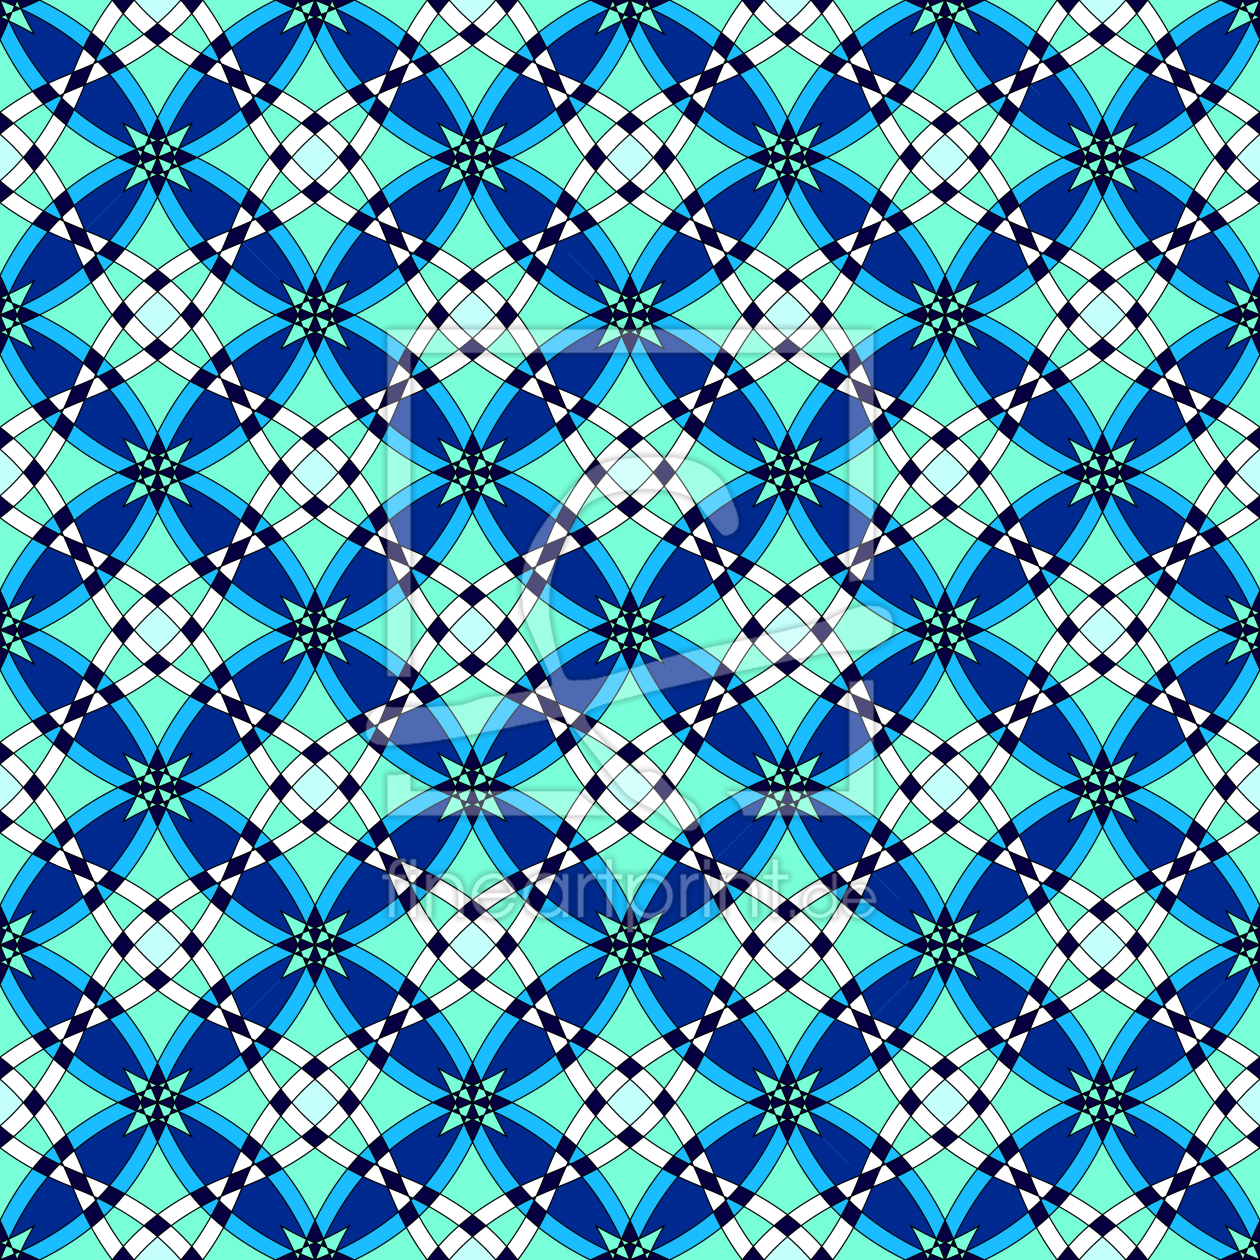 Bild-Nr.: 9006874 Atlantis Gitter erstellt von patterndesigns-com